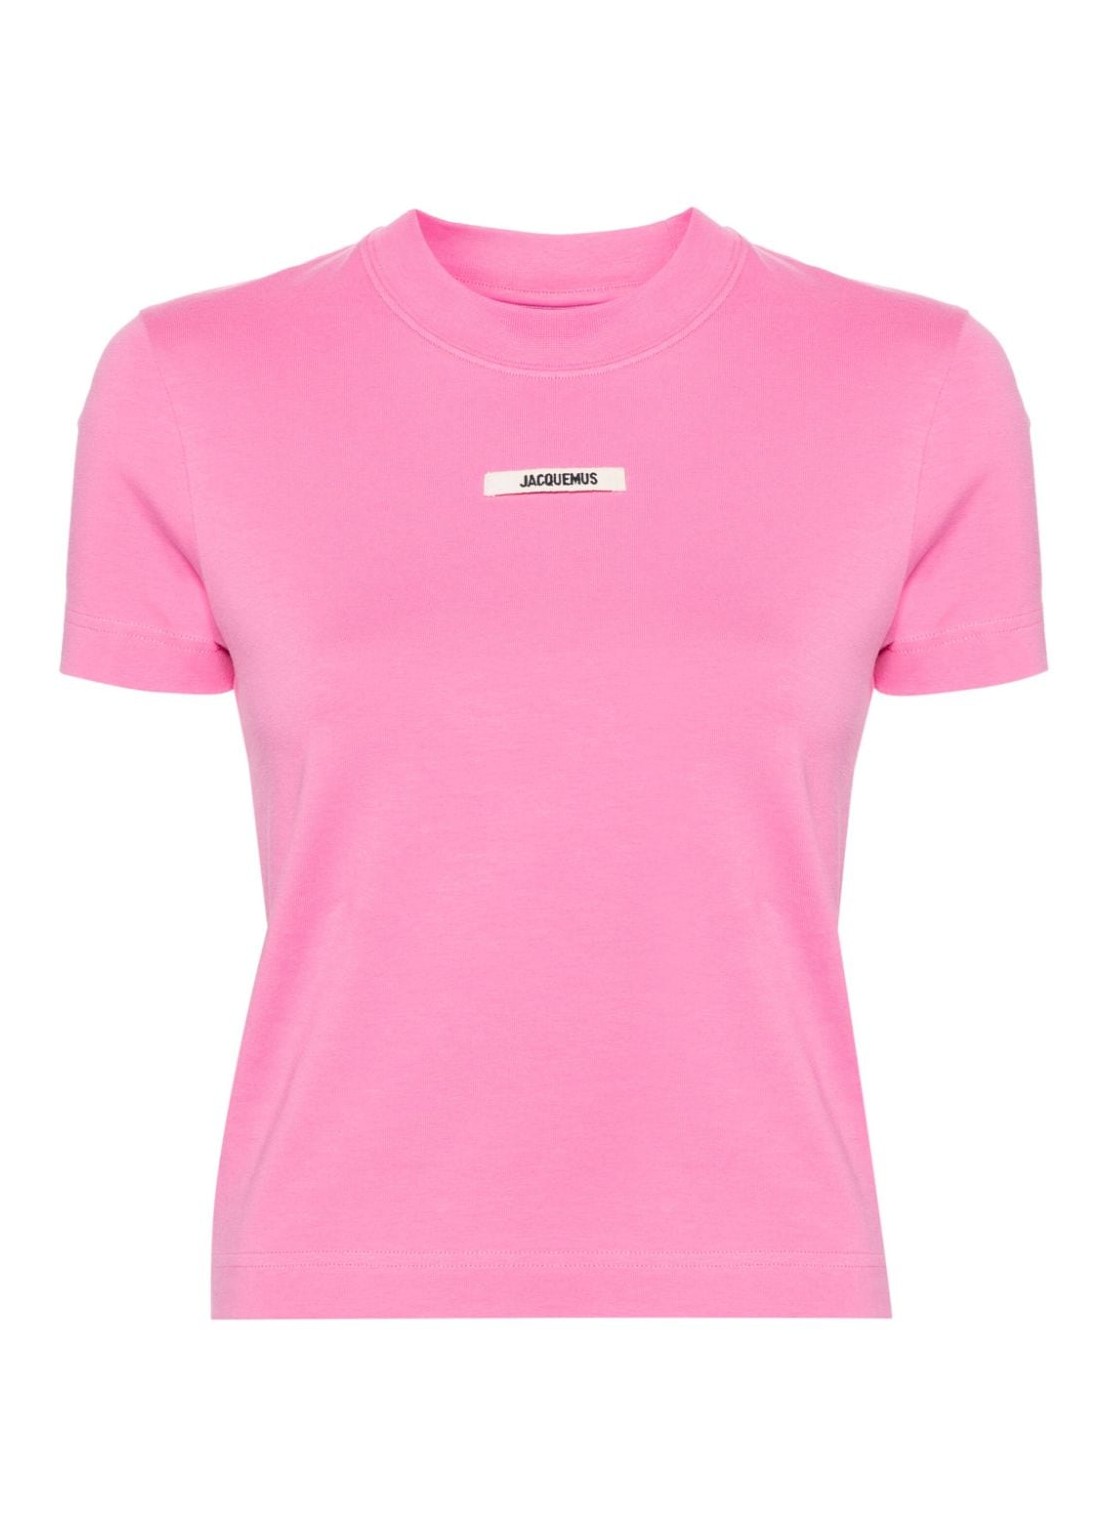 Top jacquemus top woman le tshirt gros grain 24e241js1332031 430 talla rosa
 